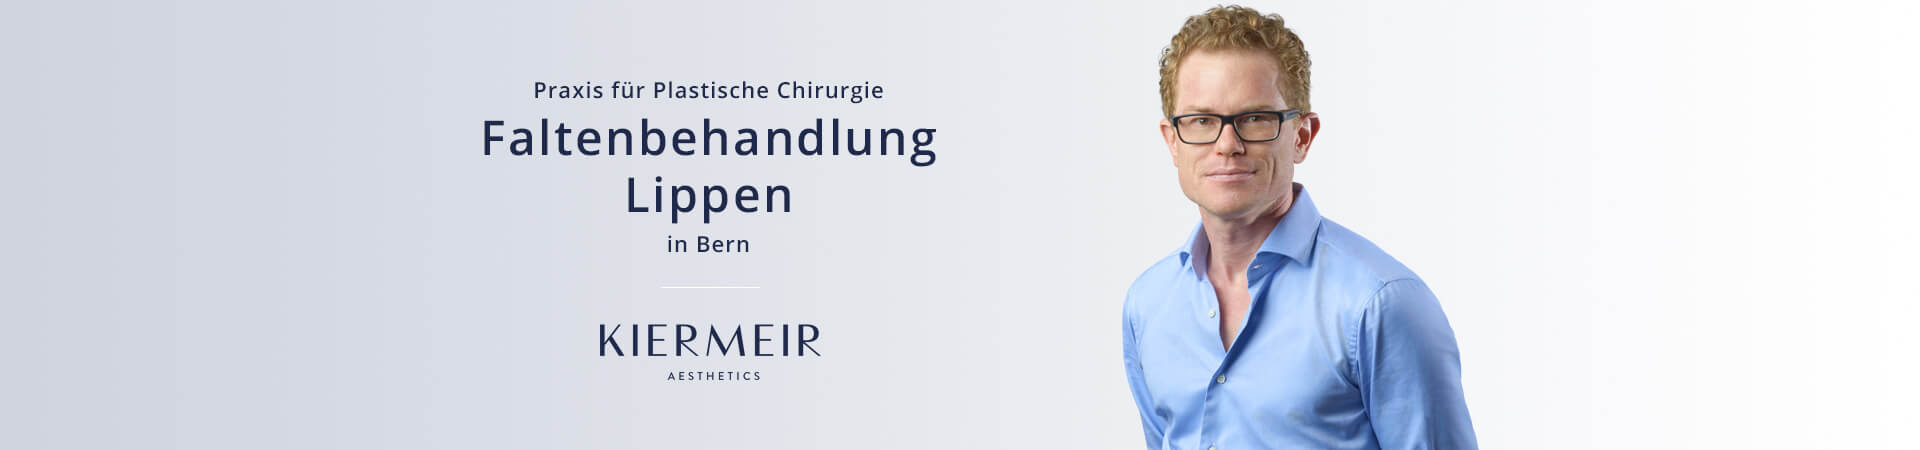 Faltenbehandlung Lippen in Bern - Dr. David Kiermeir 